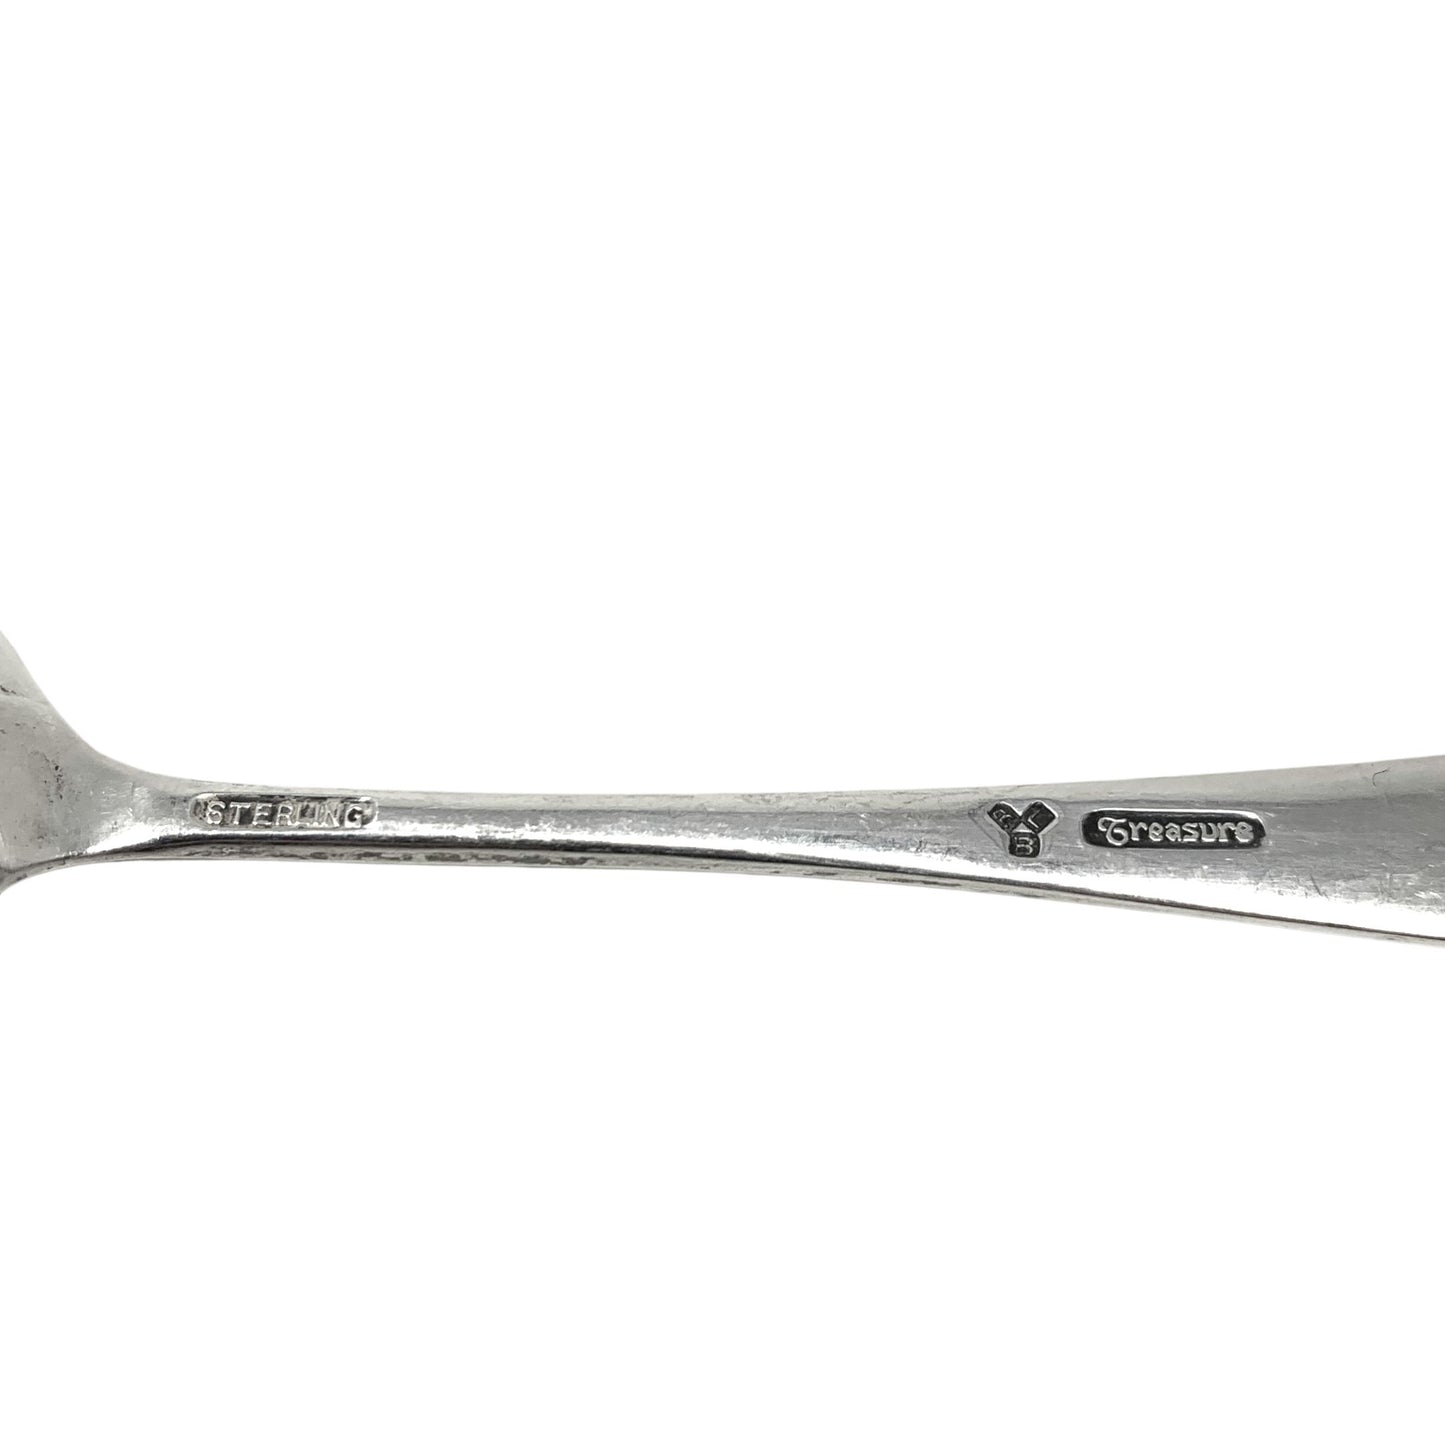 Lunt Early American Sterling Silver "H" Monogrammed Demitasse Spoons (13)